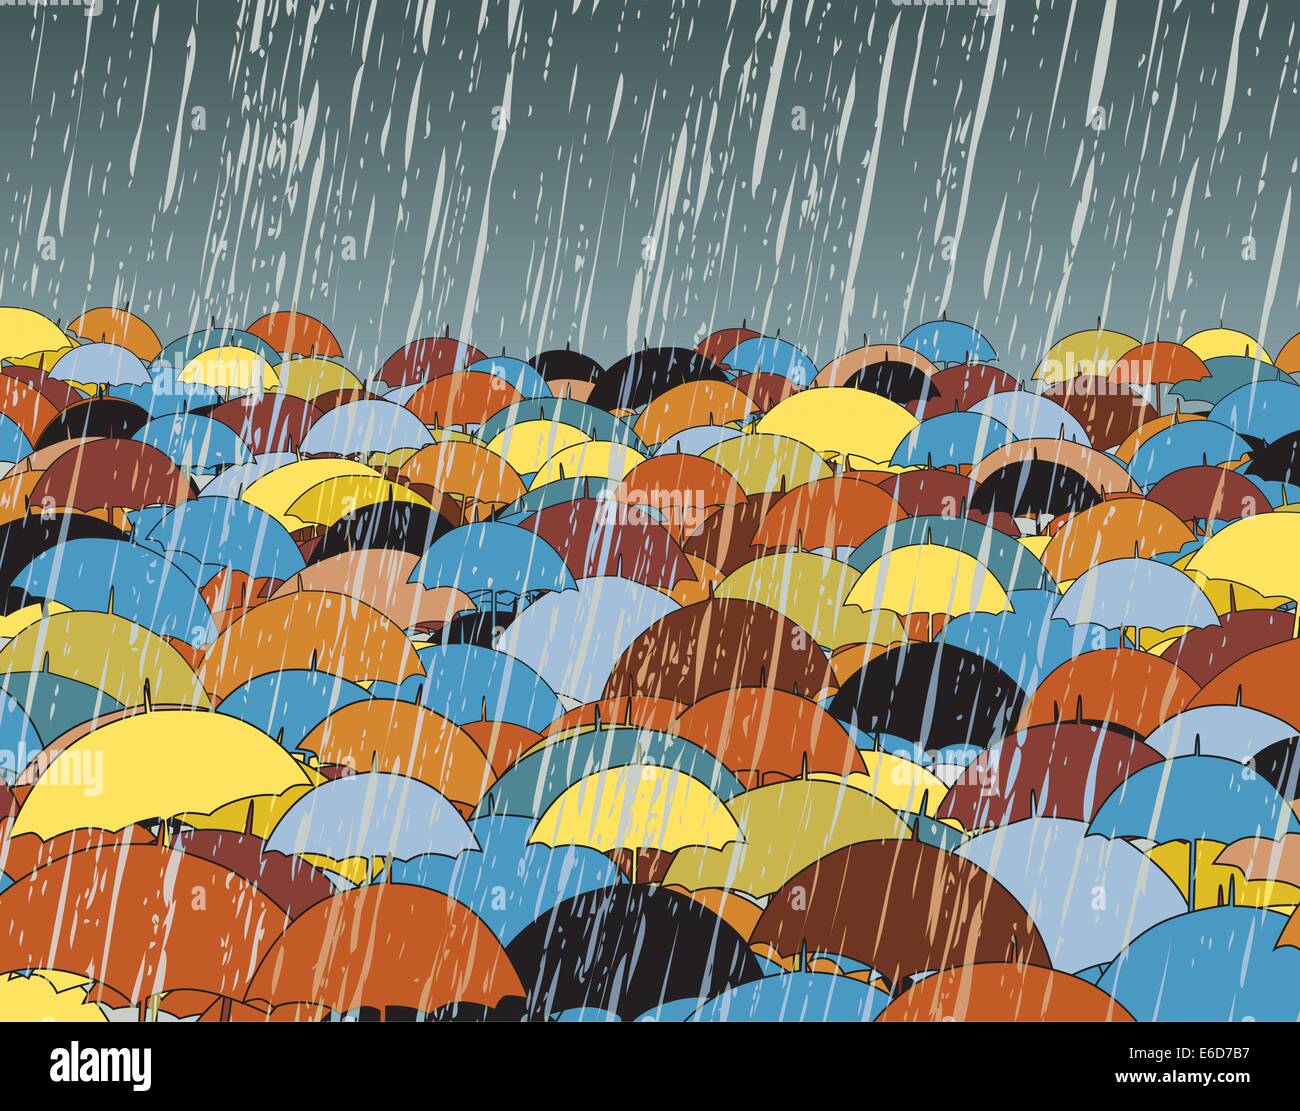 Editable vector illustration of colorful umbrellas in rain Stock Vector